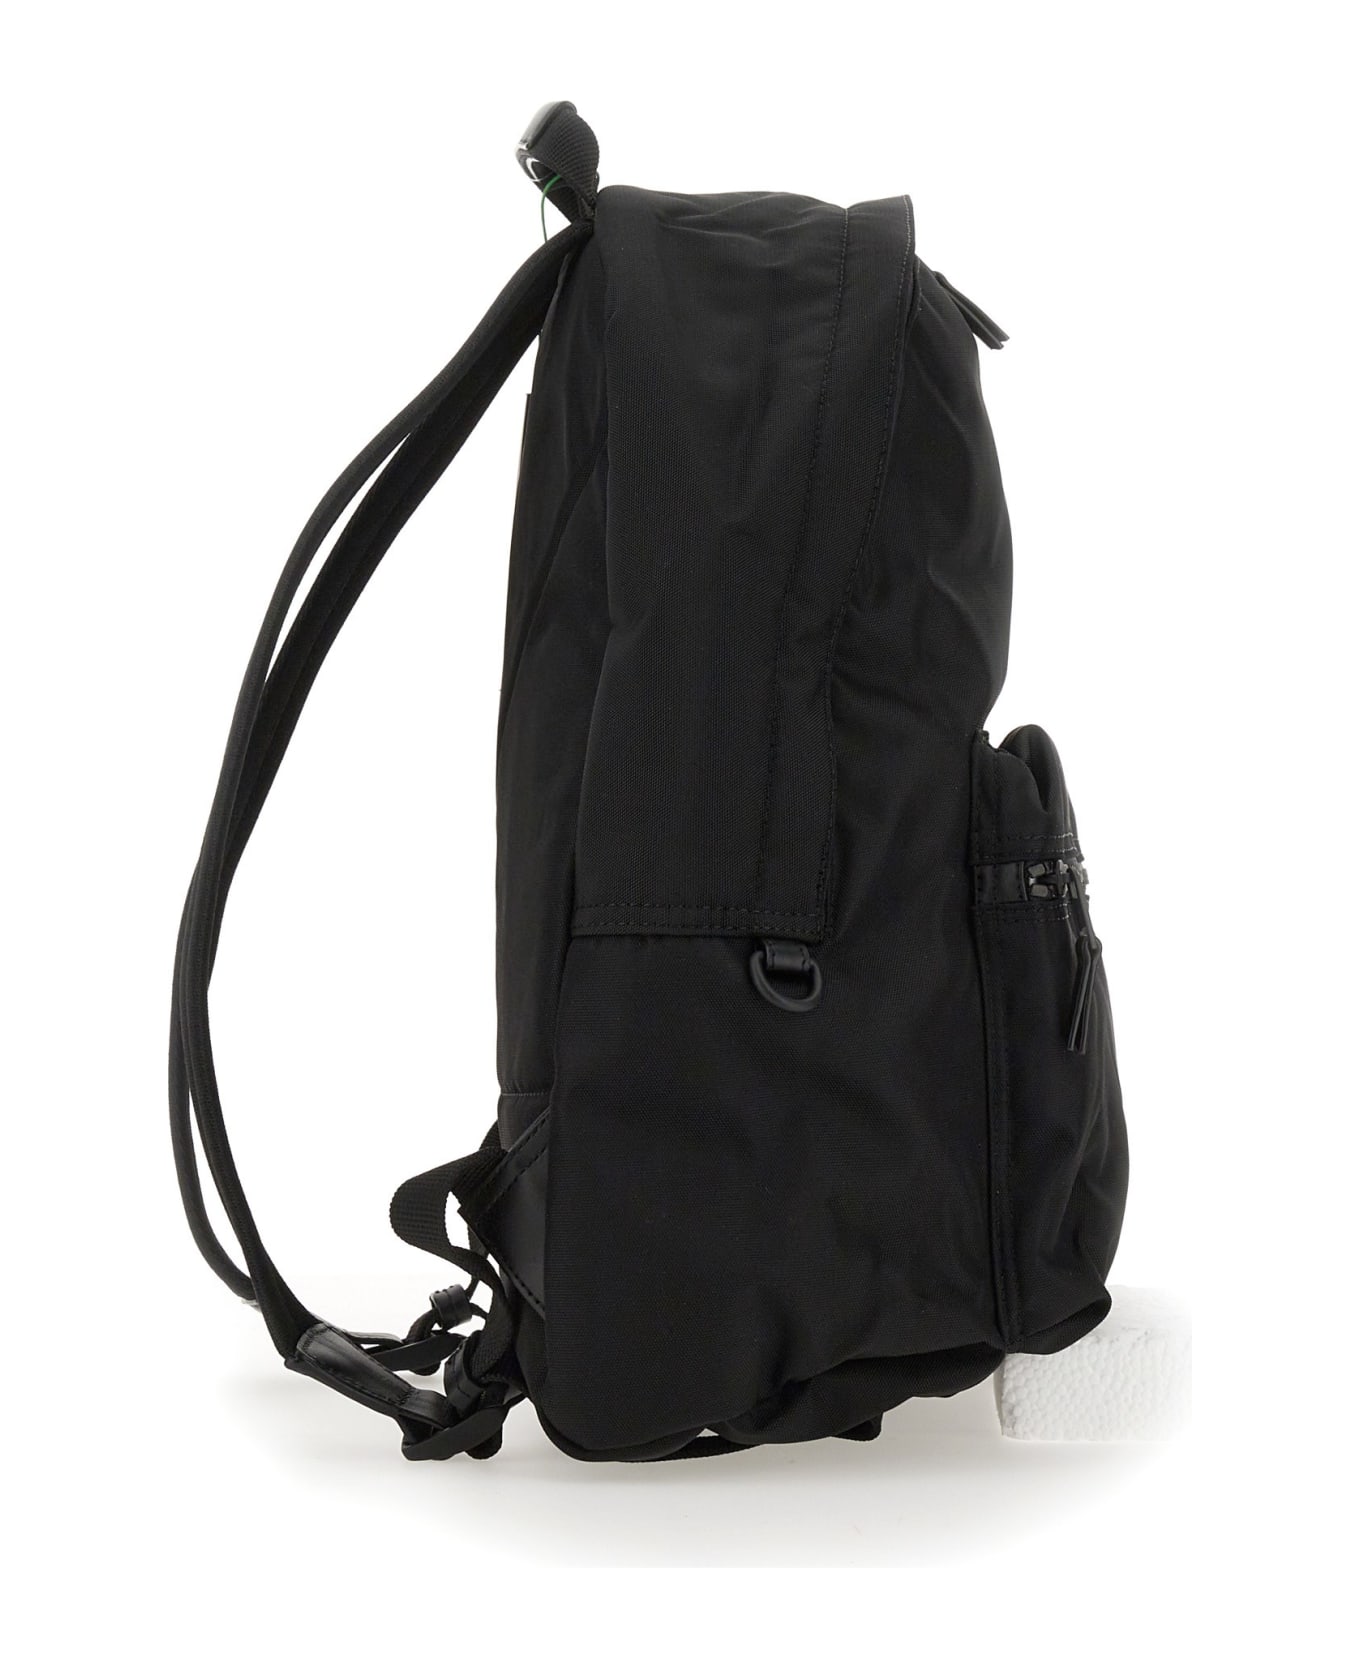 Kenzo Backpack With Logo - 99 NOIR